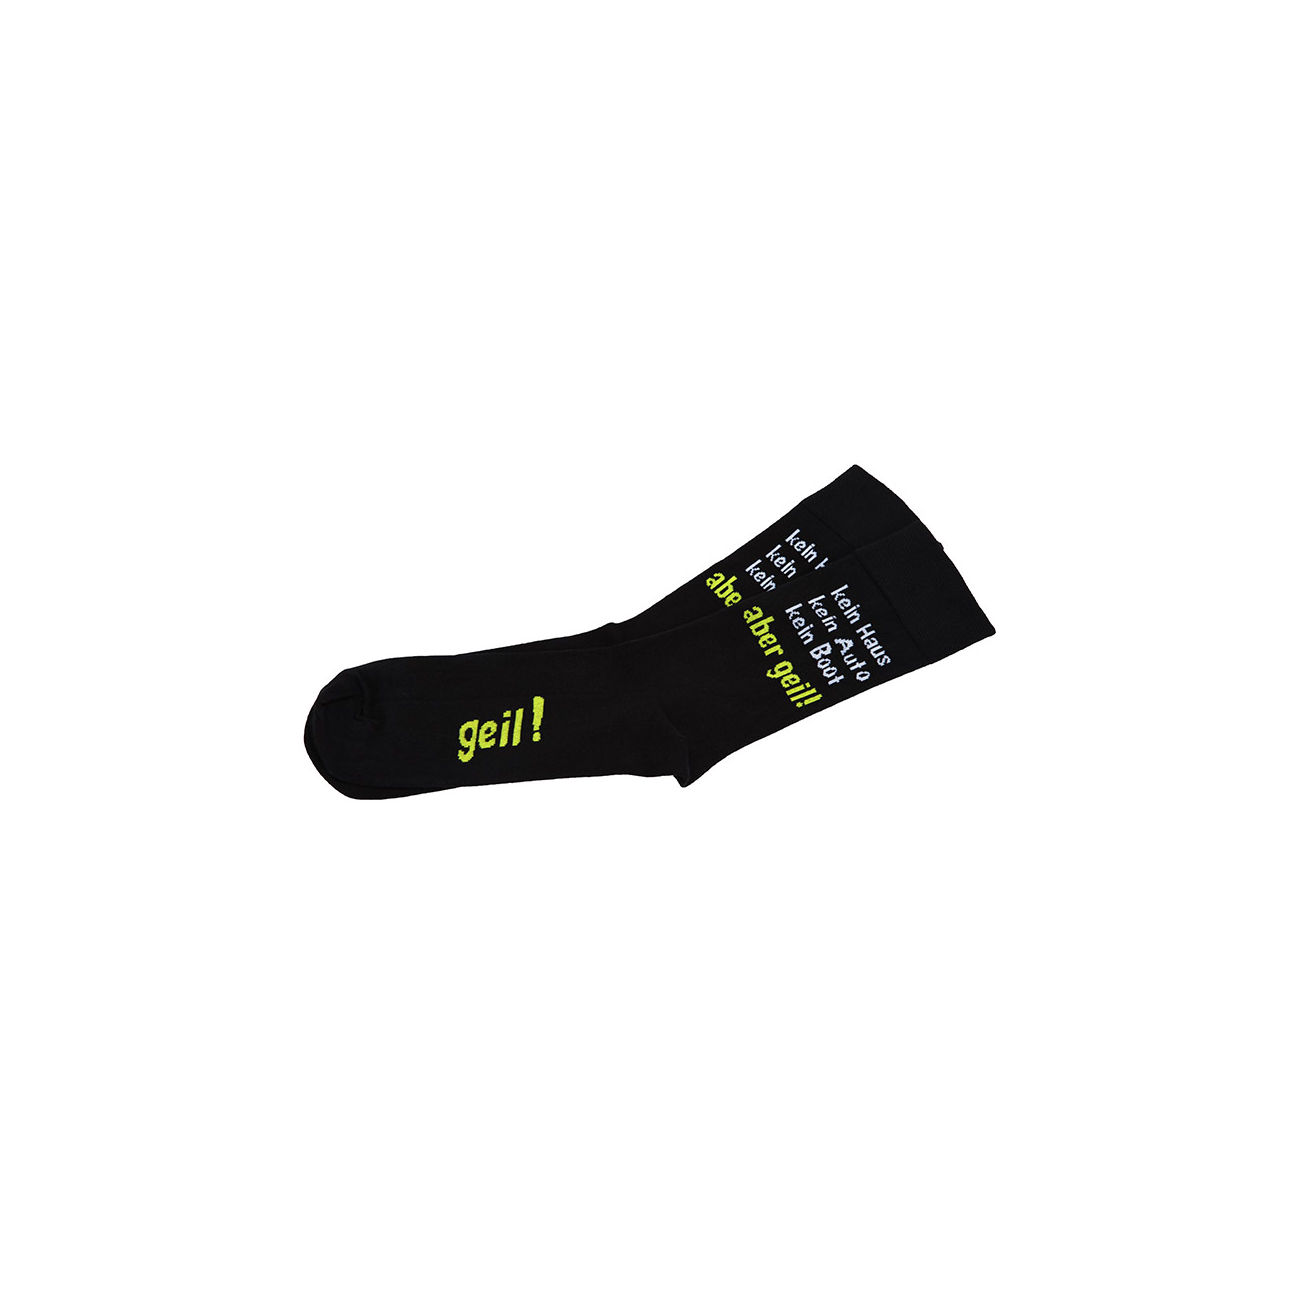 Fun-Sox Socken aber geil! one size